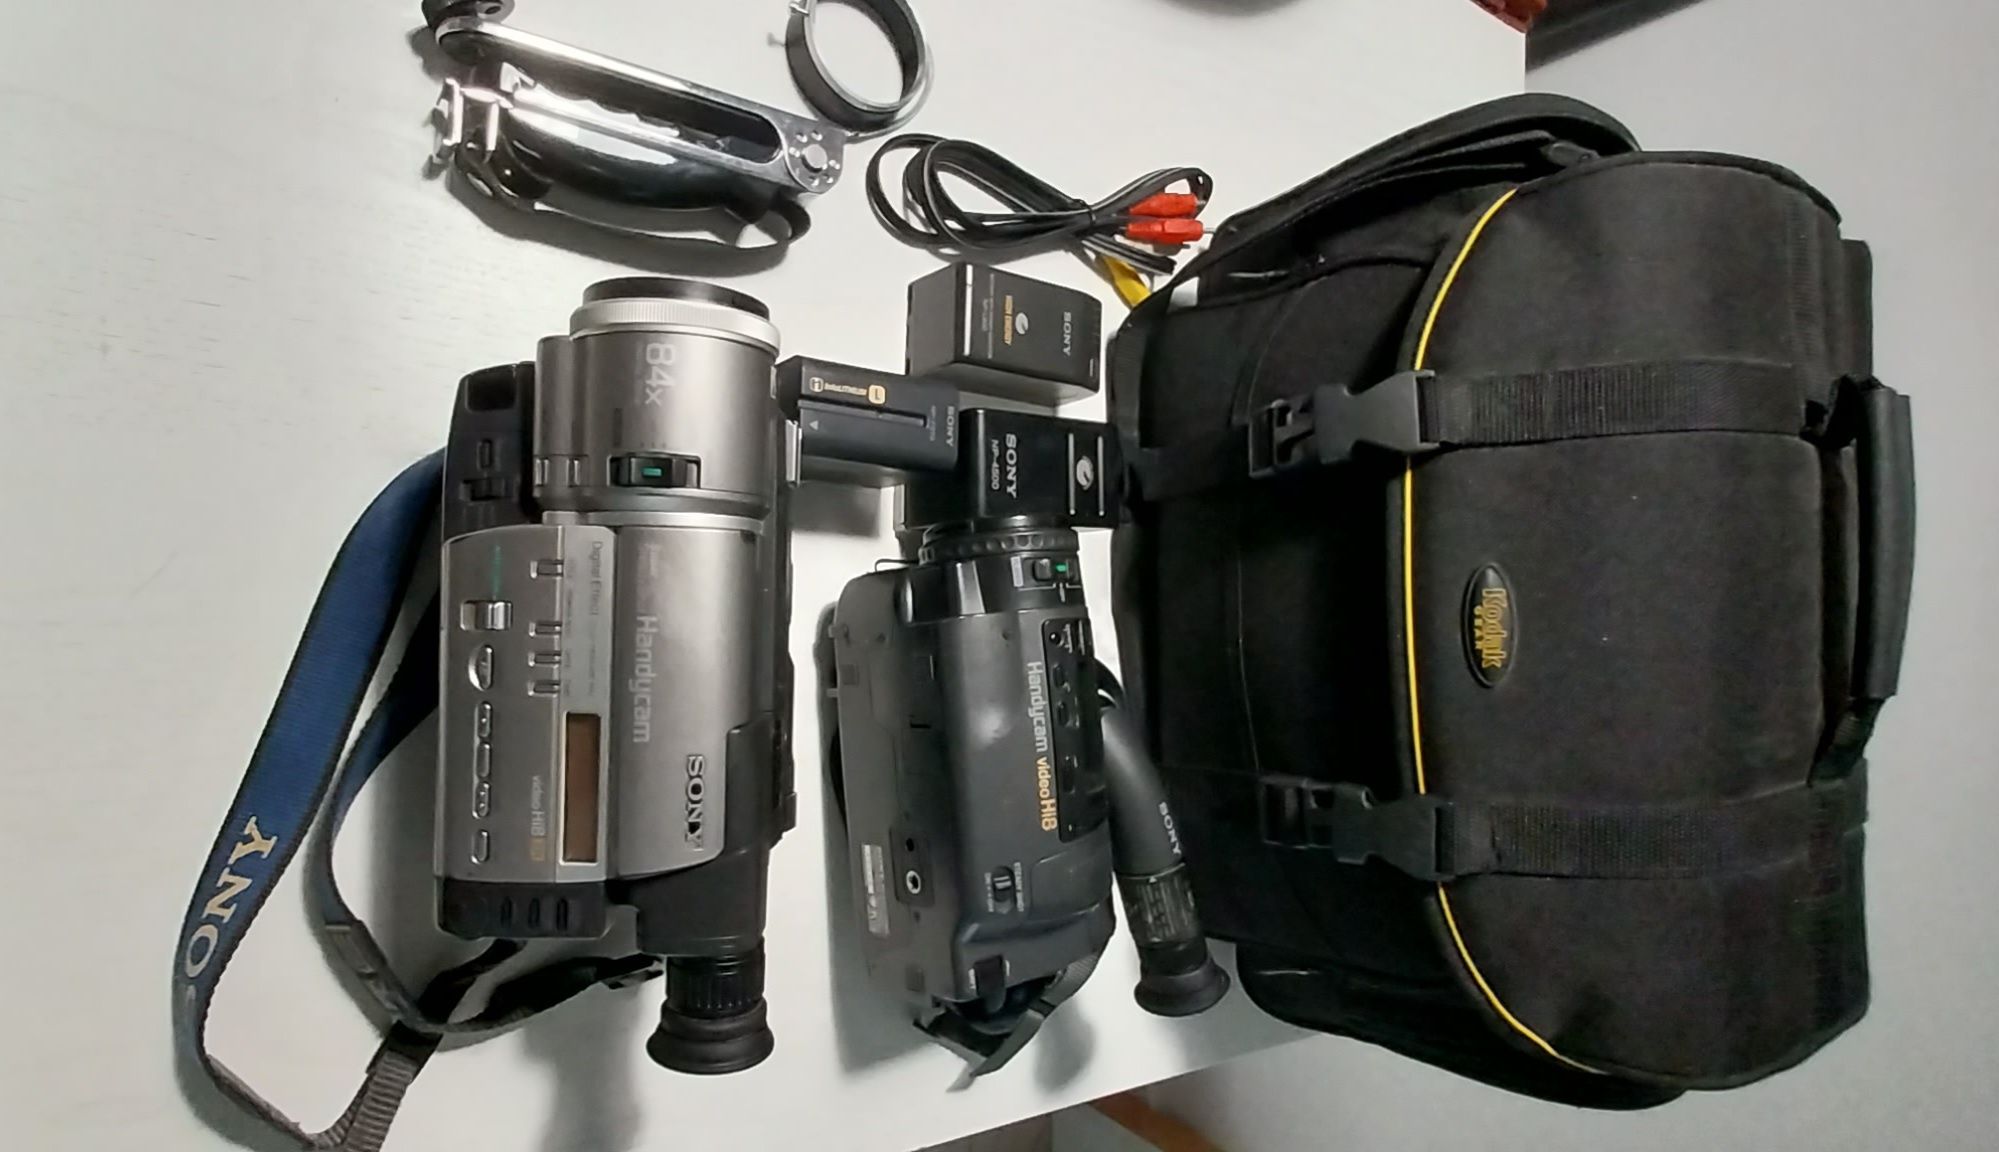 2 maquinas de filmar Sony e mala de transporte kodak